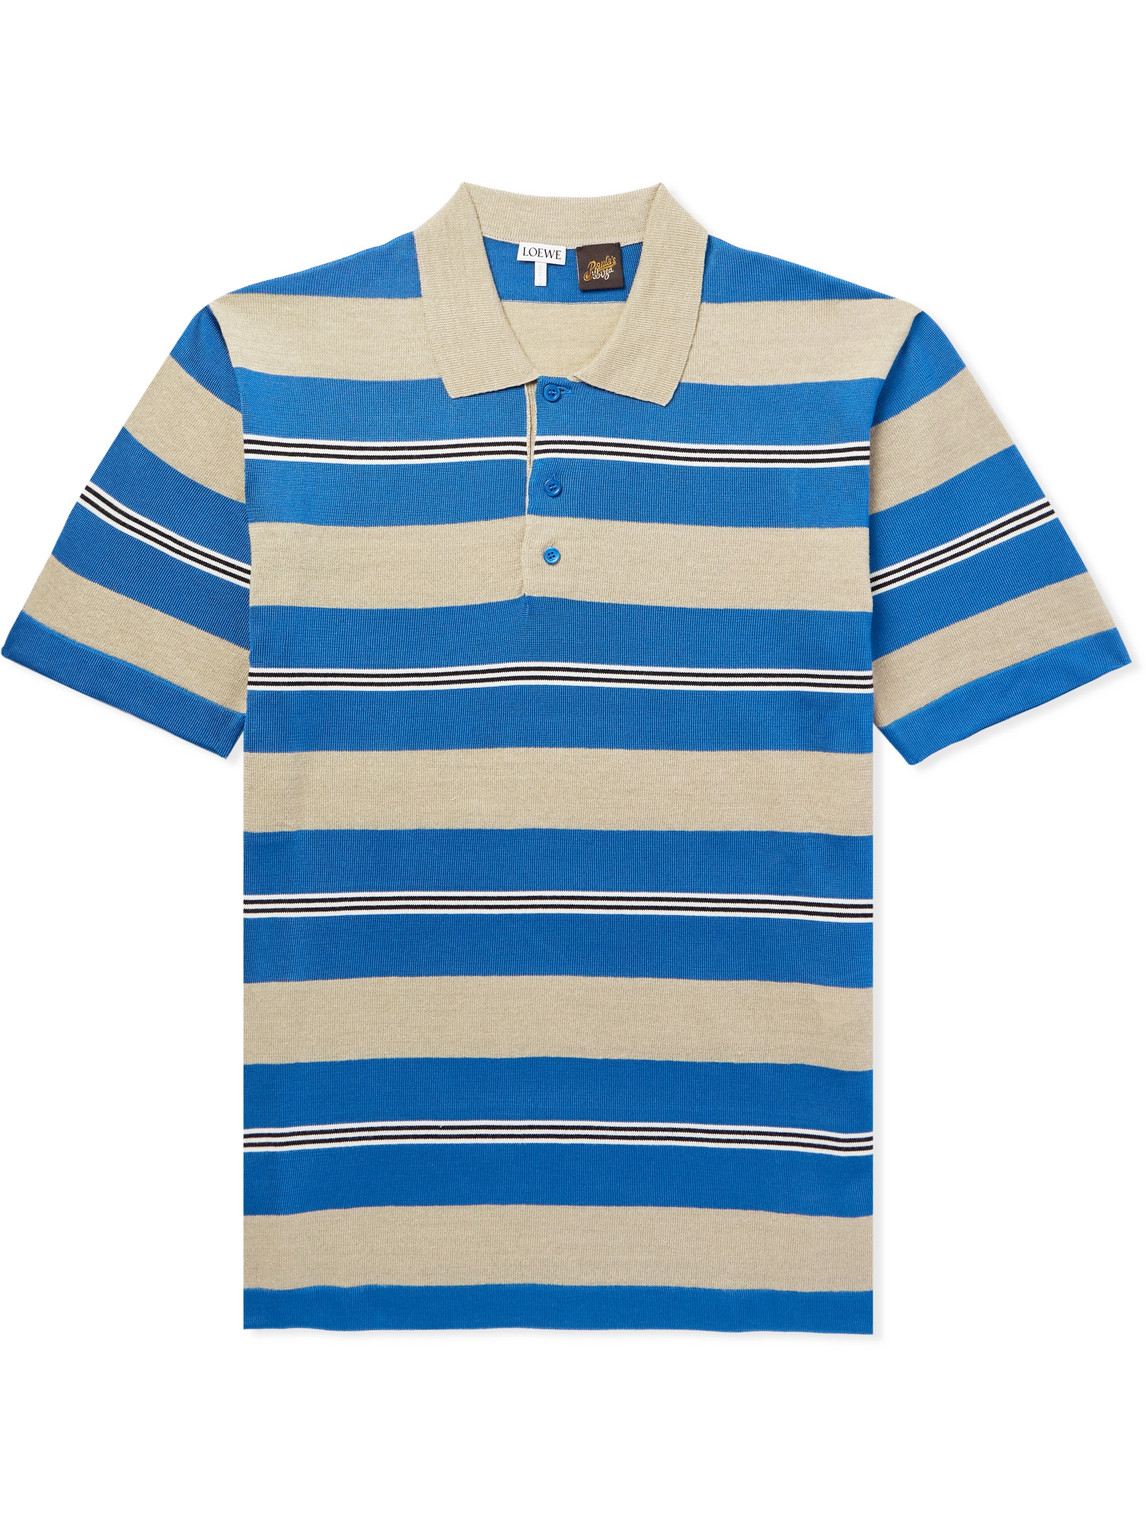 LOEWE - Paula's Ibiza Striped Silk, Linen and Cotton Polo Shirt - Men - Blue - L von LOEWE